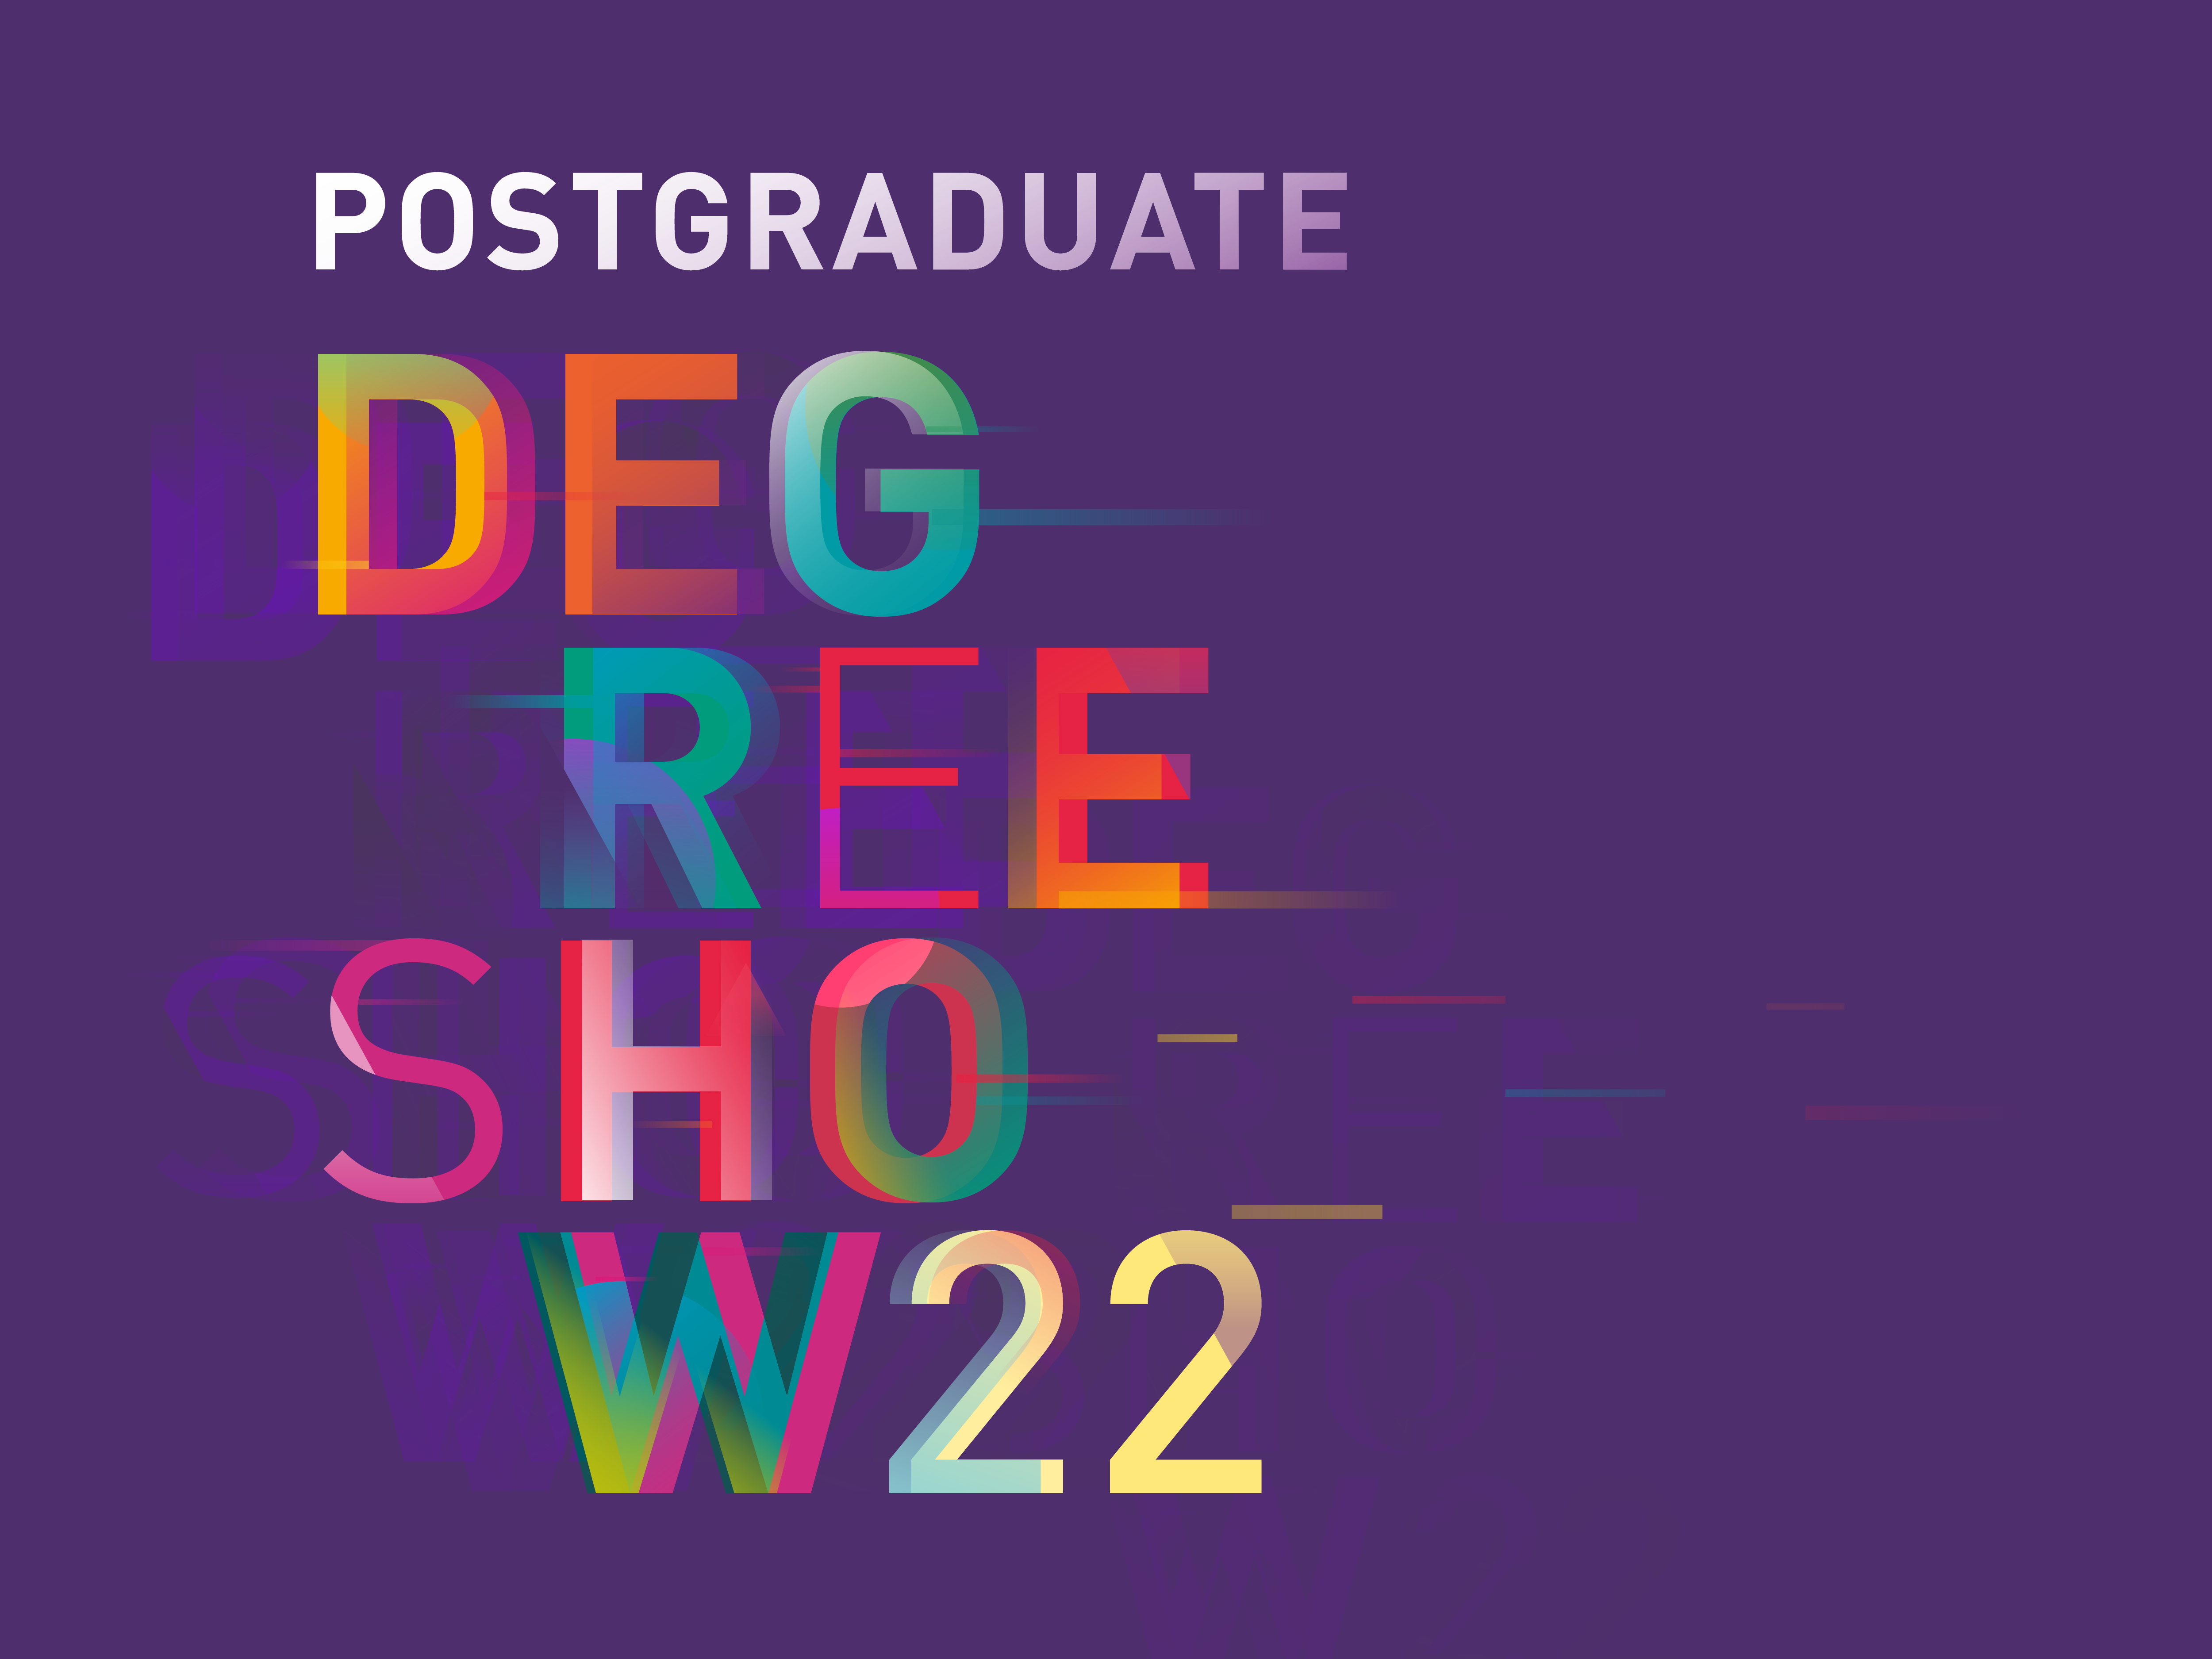 Design and Creative Arts Post Graduate degree show 2022